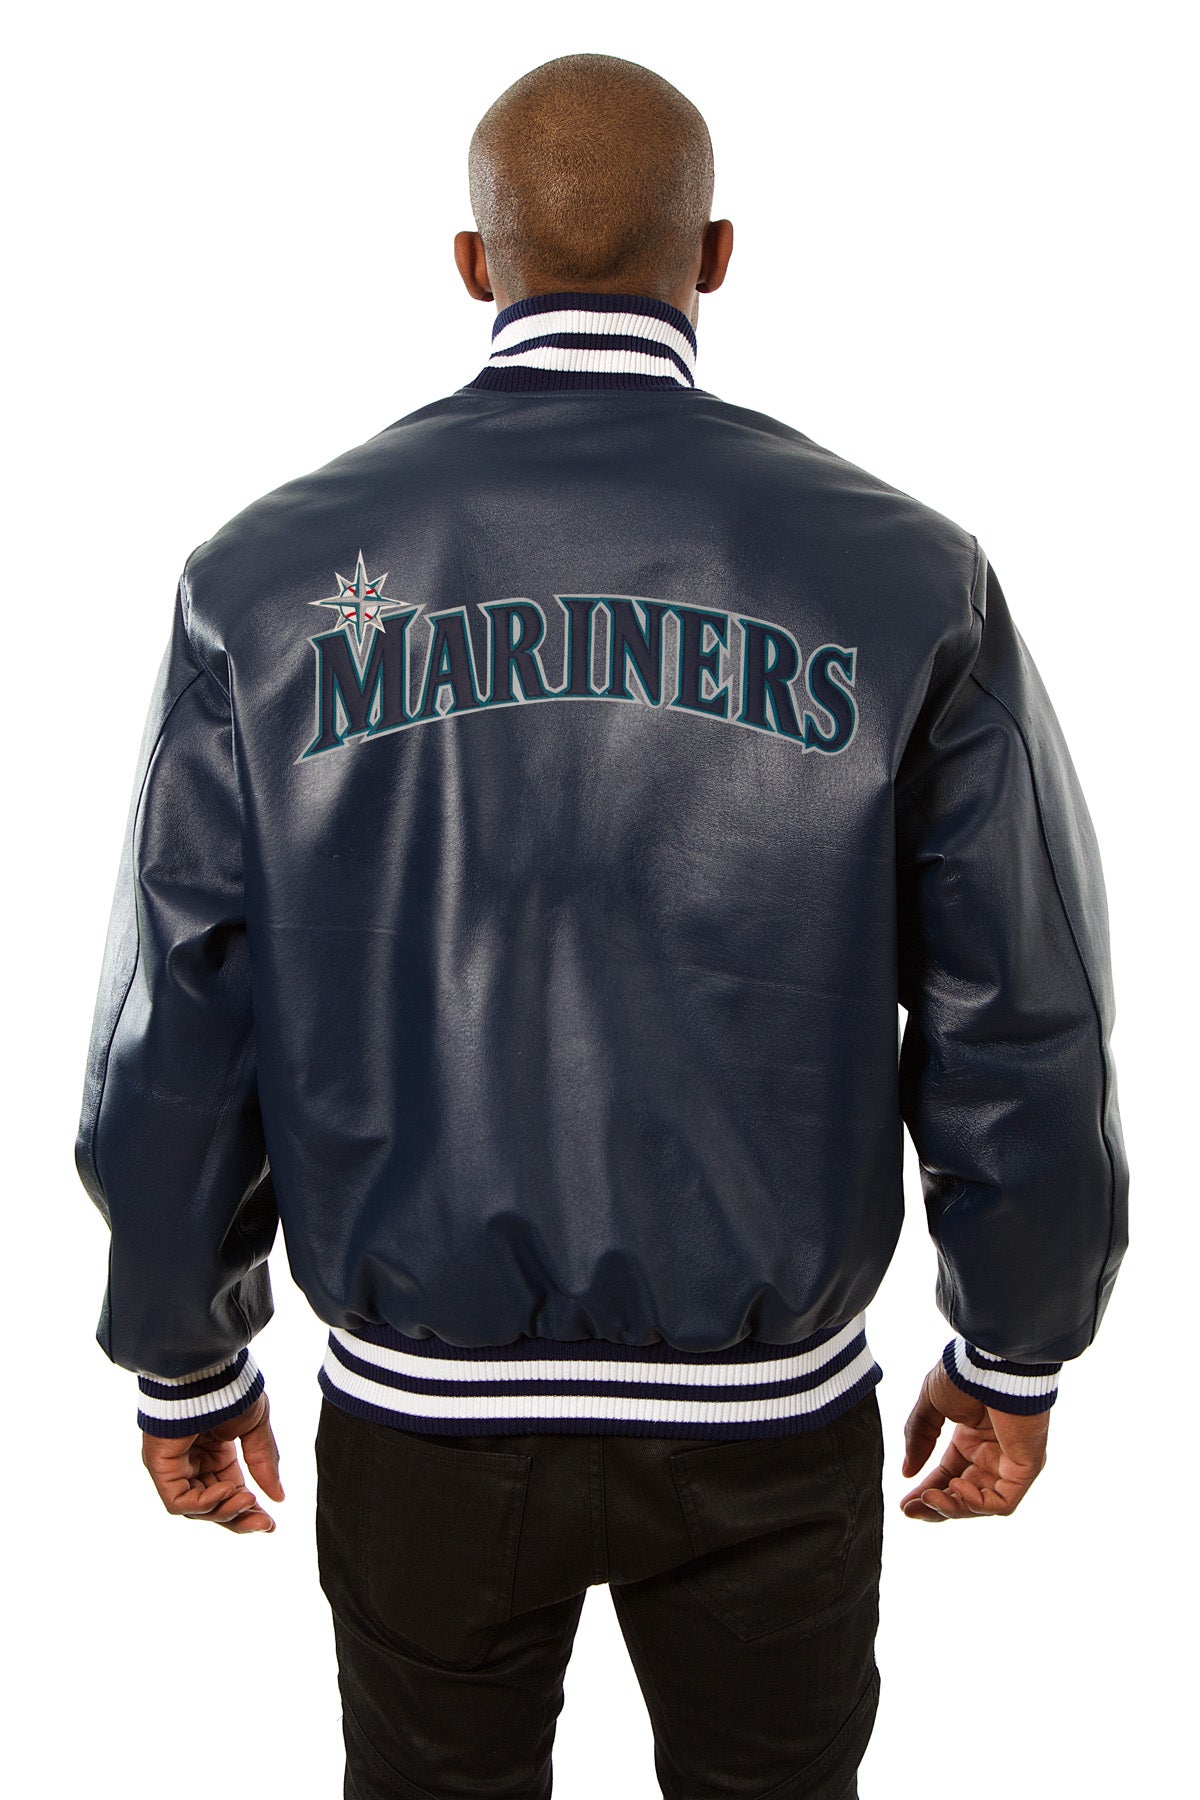 Seattle Mariners Full Leather Jacket